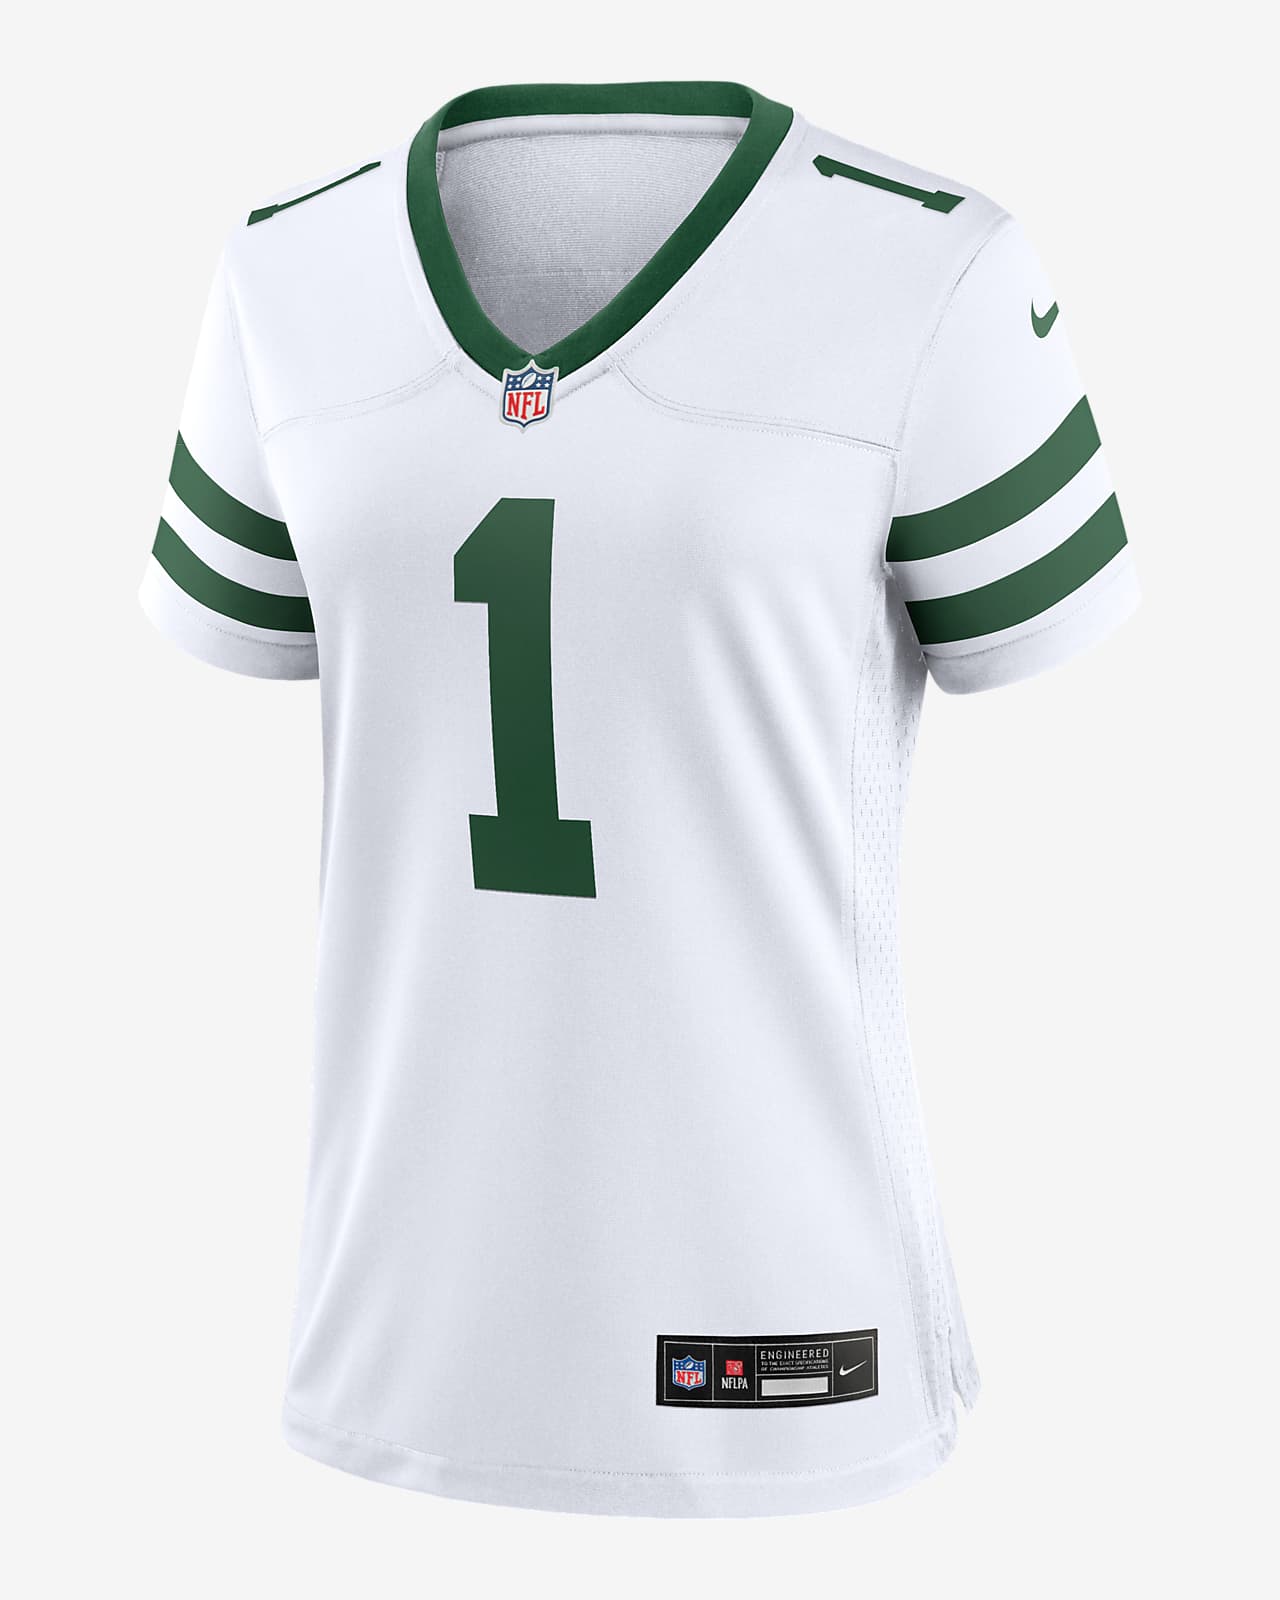 Sauce Gardner New York Jets Women's Nike NFL Game Football Jersey